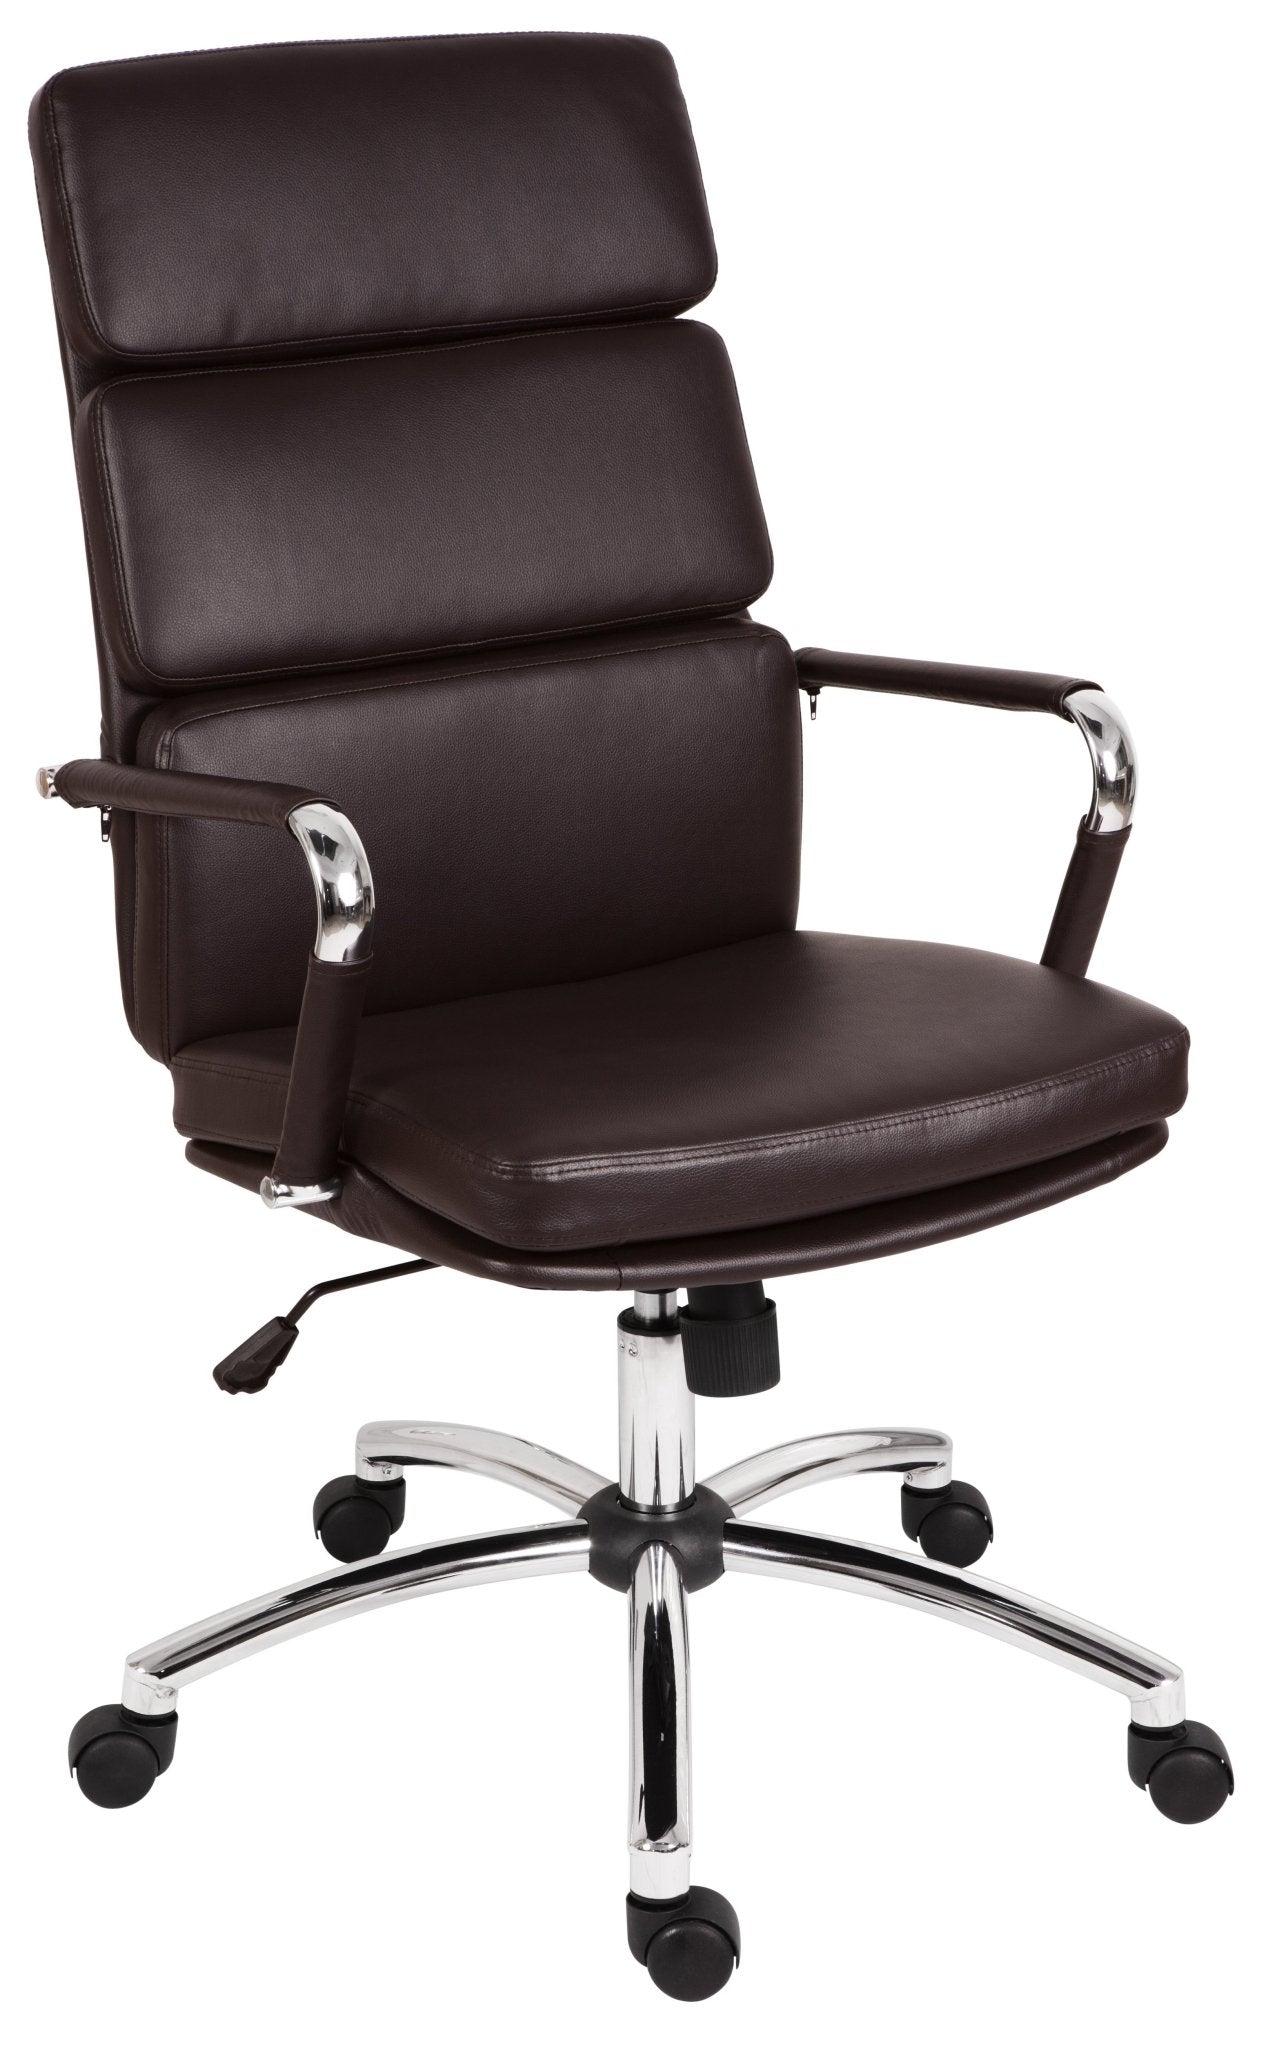 Deco executive office chair (brown) - crimblefest furniture - image 1